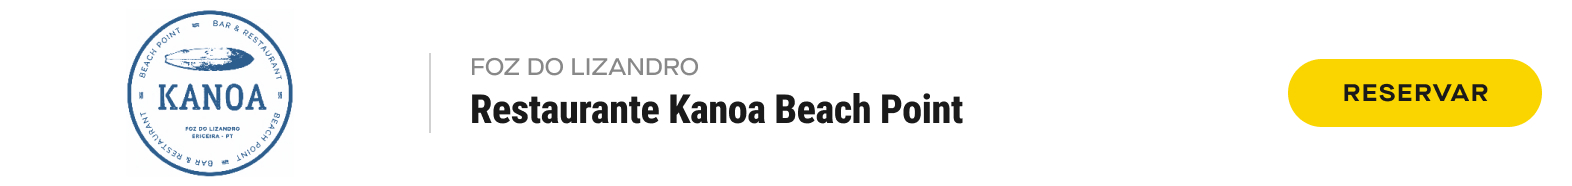 49.Desktop Restaurante Kanoa Beach Point Foz Do Lizandro